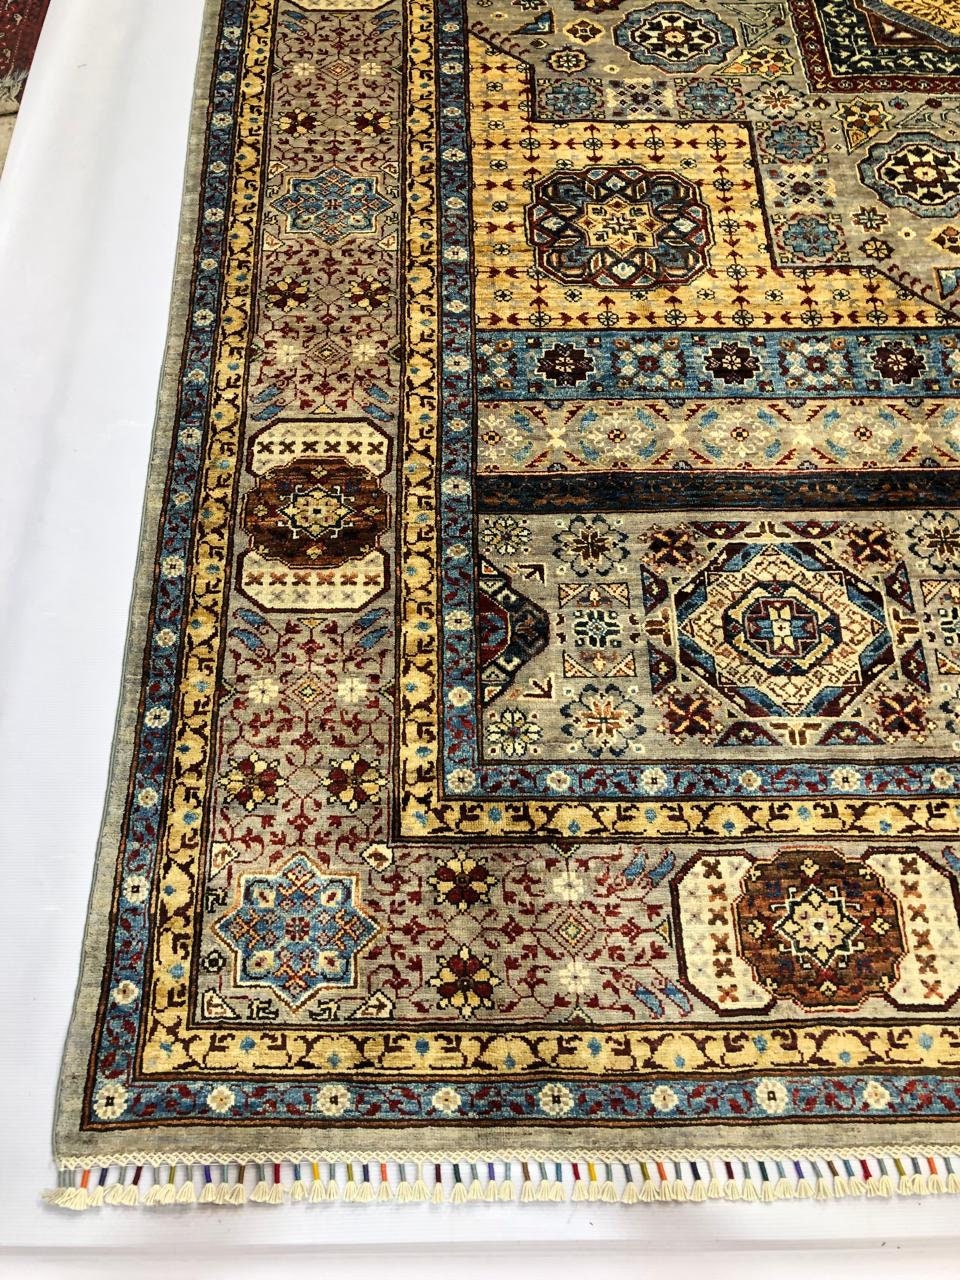 8x11 Feet Top Quality Mamluk Handmade Afghan Rug, Persian Designed from Tribal Ghazni | Living room Carpet, Neon Colored